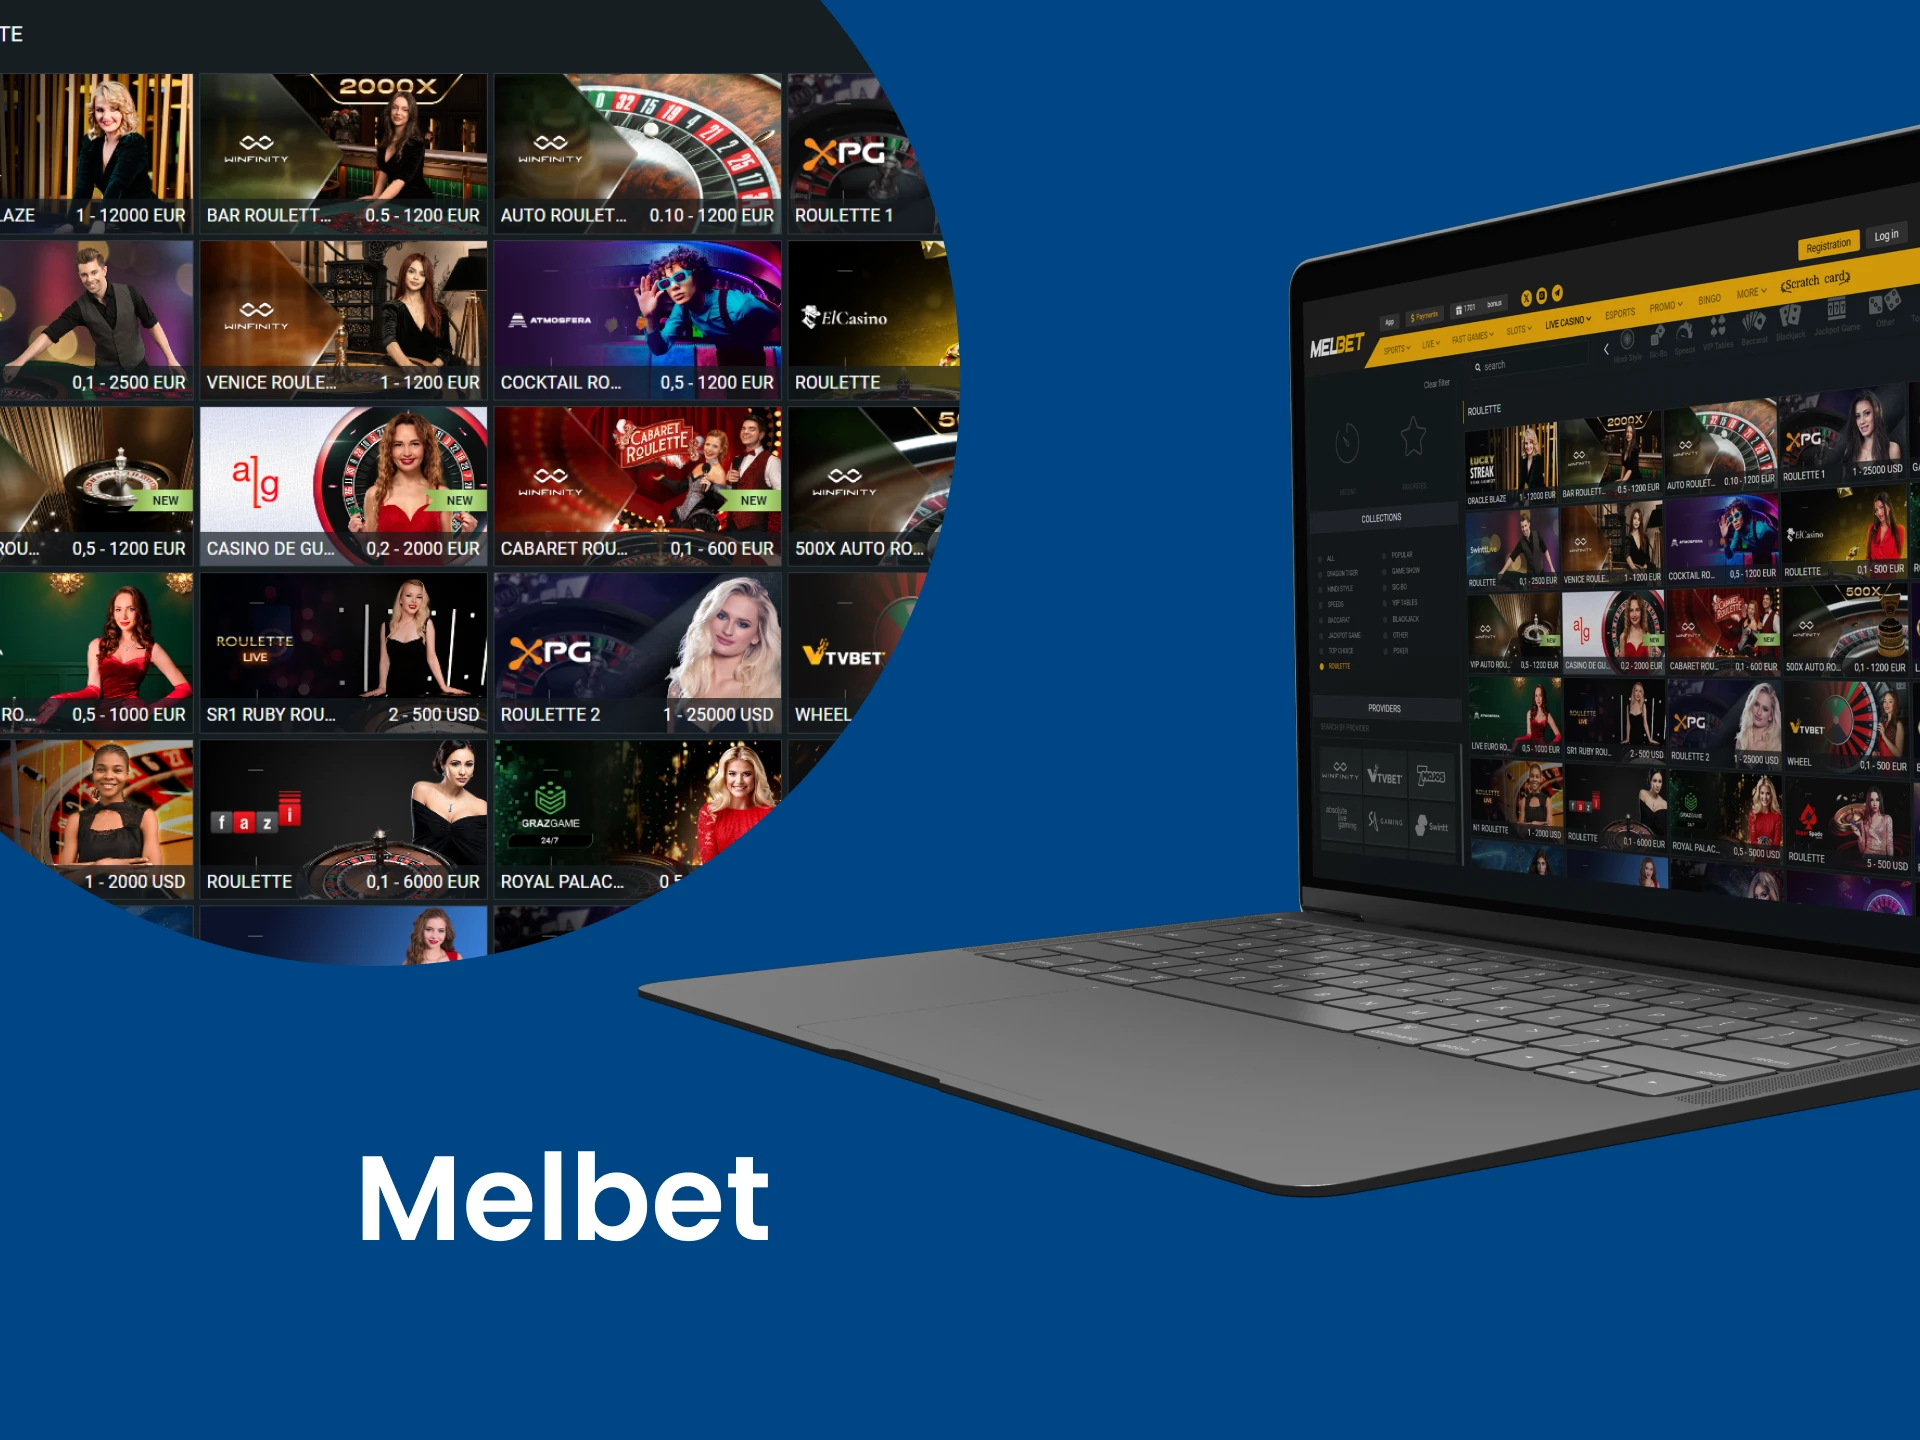 For roulette games, choose Melbet.